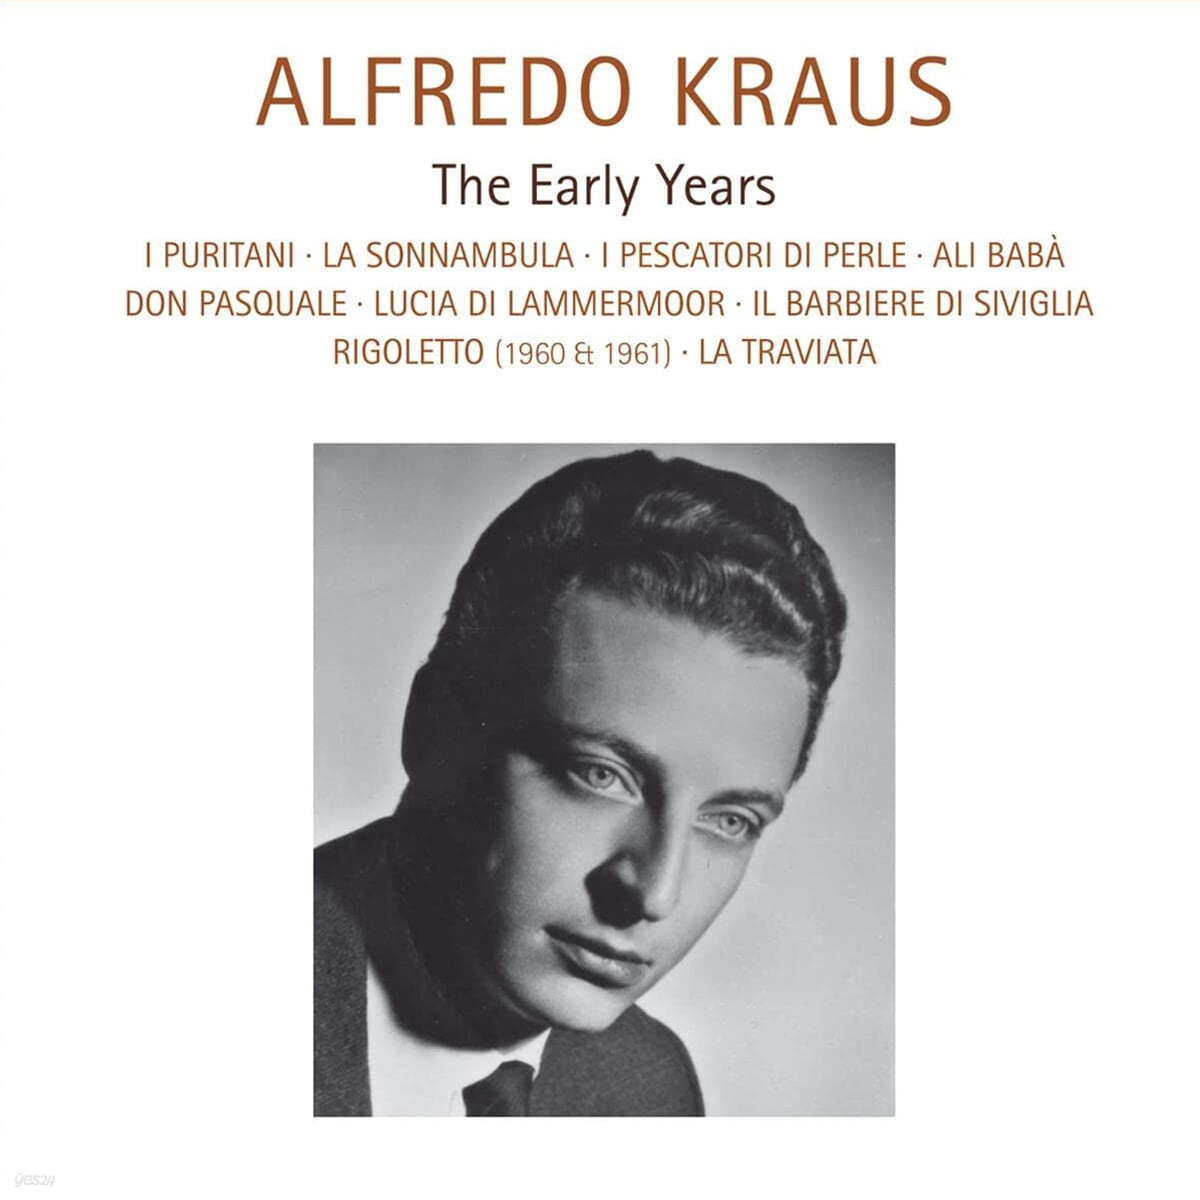 Alfredo Kraus 알프레도 크라우스 초기 실황 녹음 1958-63년 (The Early Years, 1958-1963)